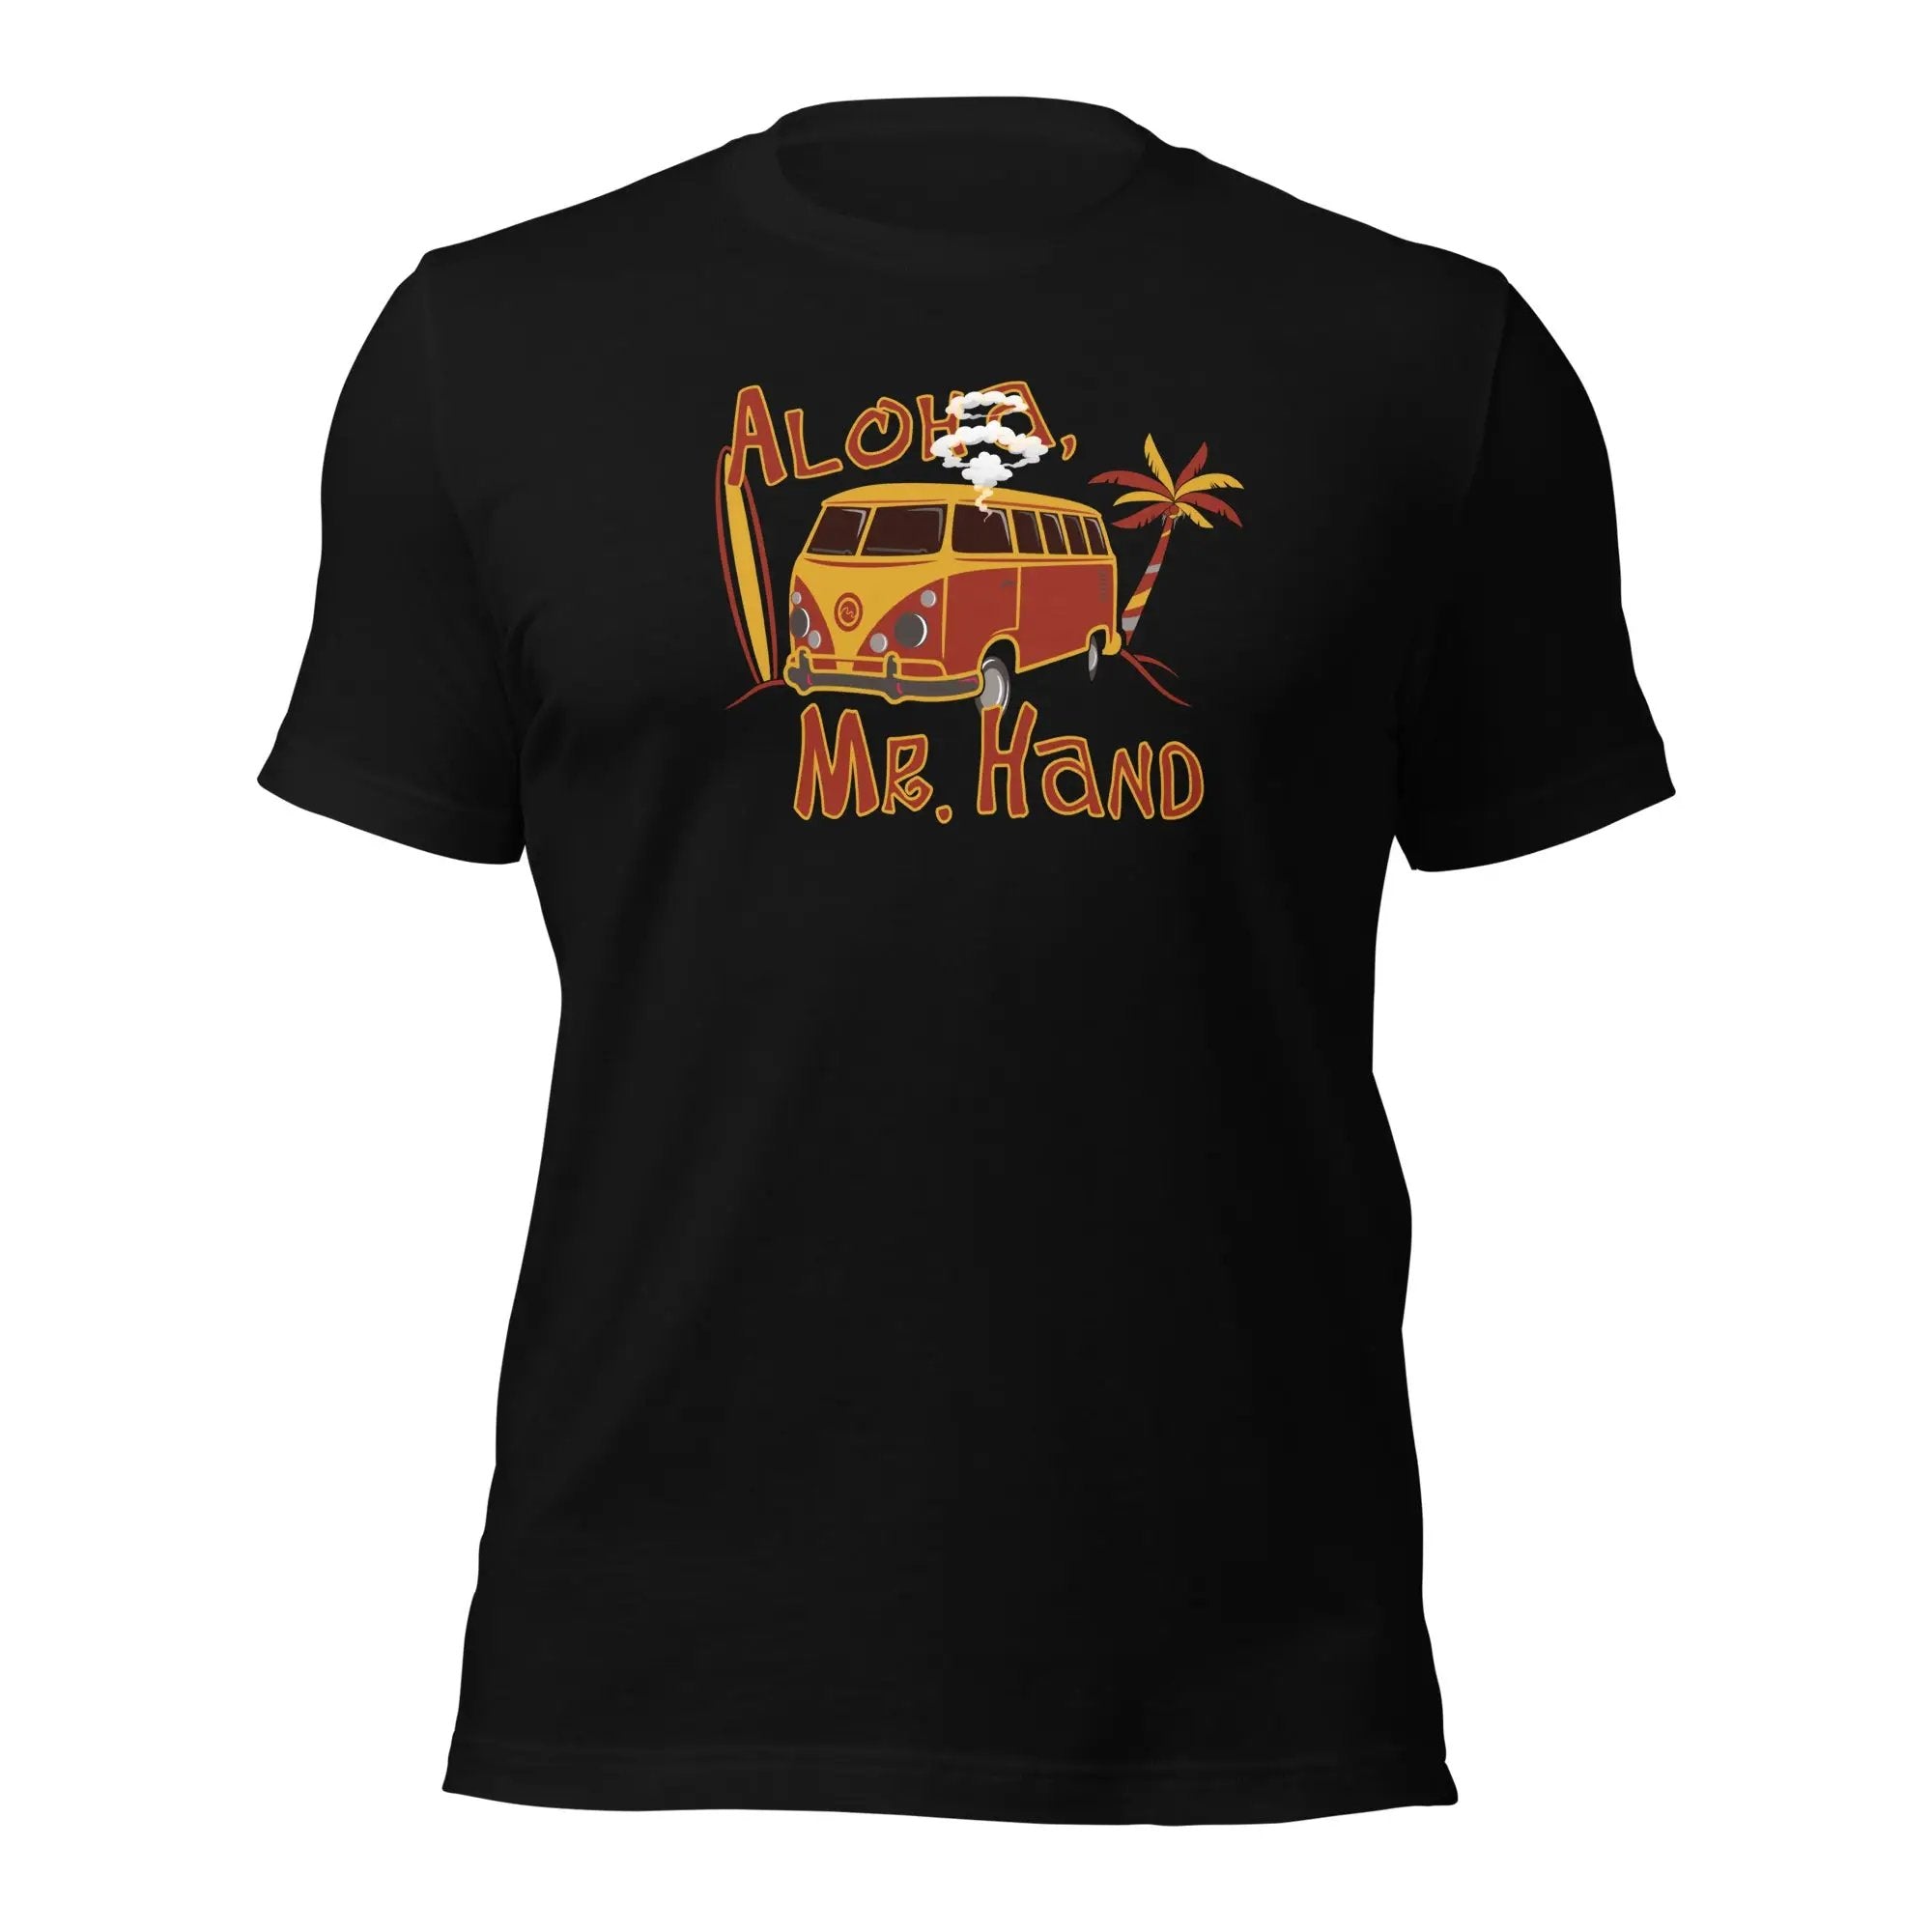 Aloha Mr. Hand! Unisex t-shirt